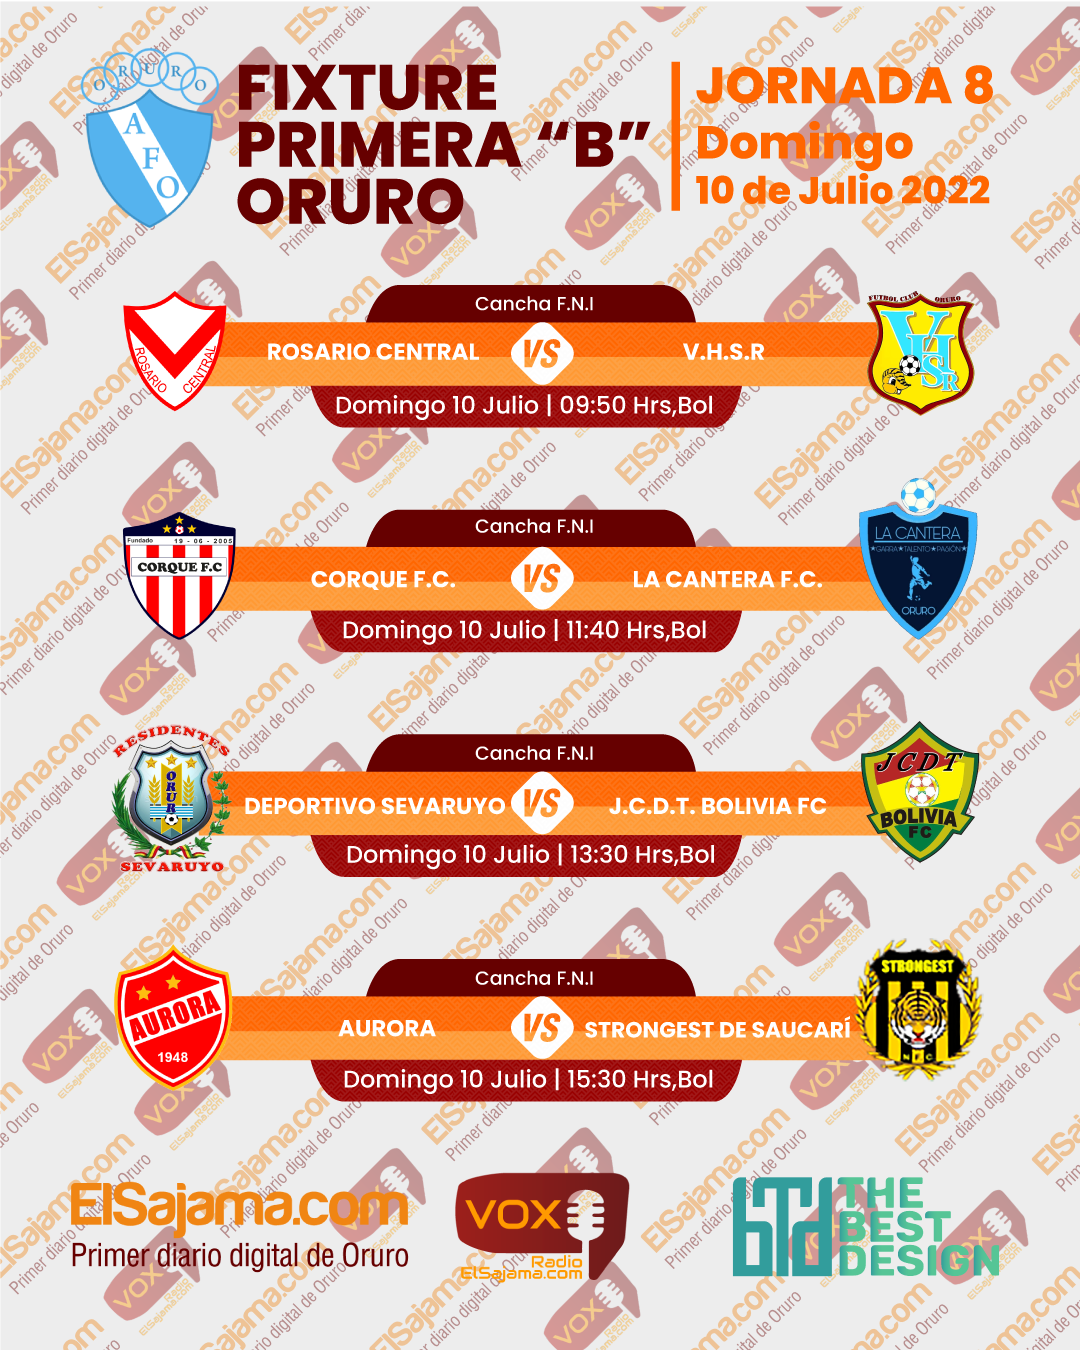 Fixture Primera B Oruro